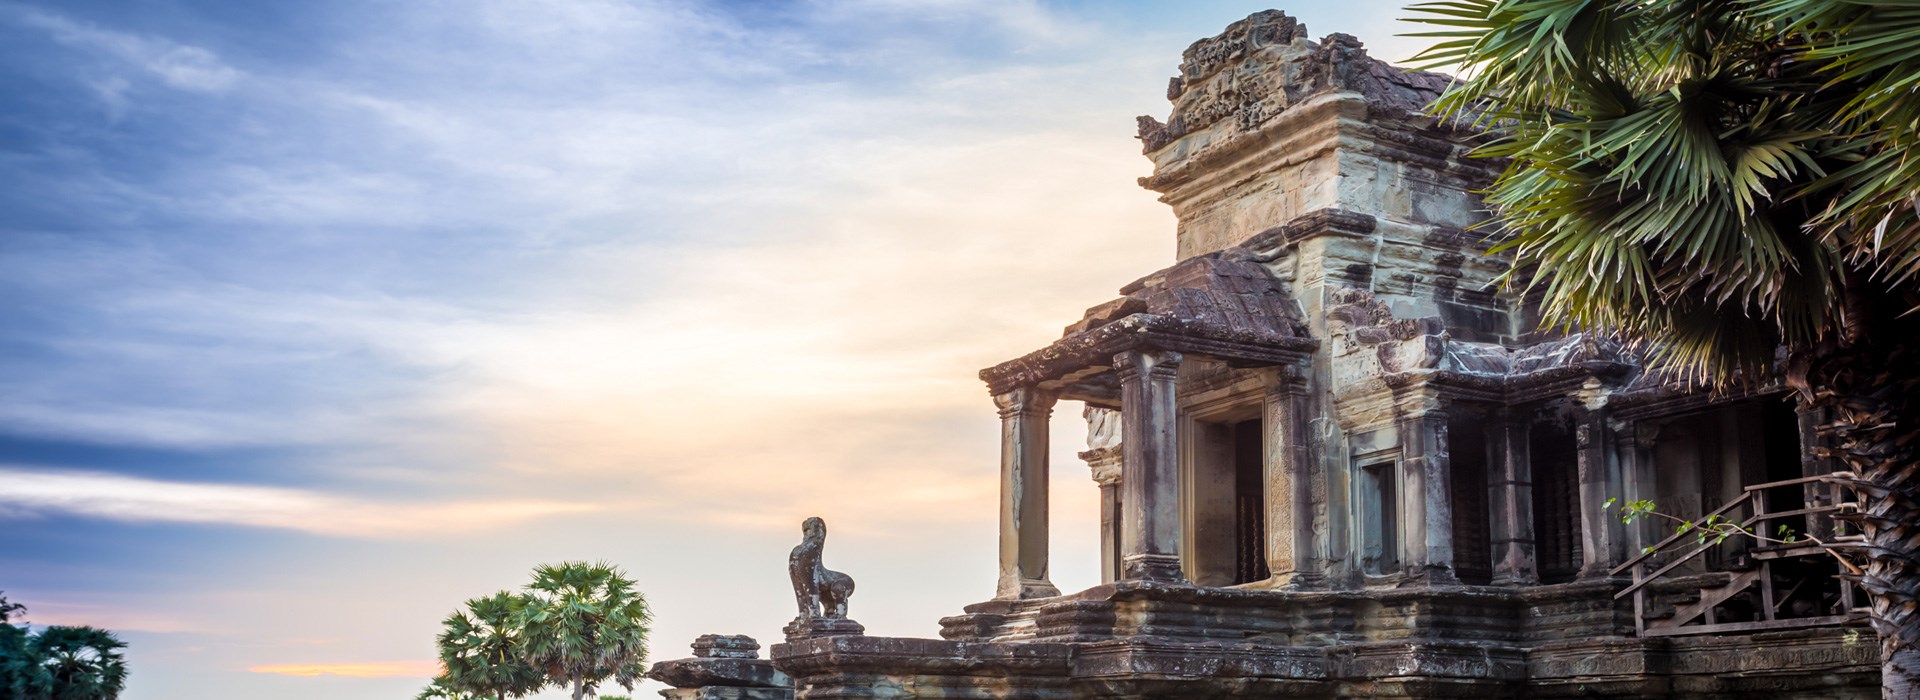 Visiter Les temples d'Angkor - Cambodge